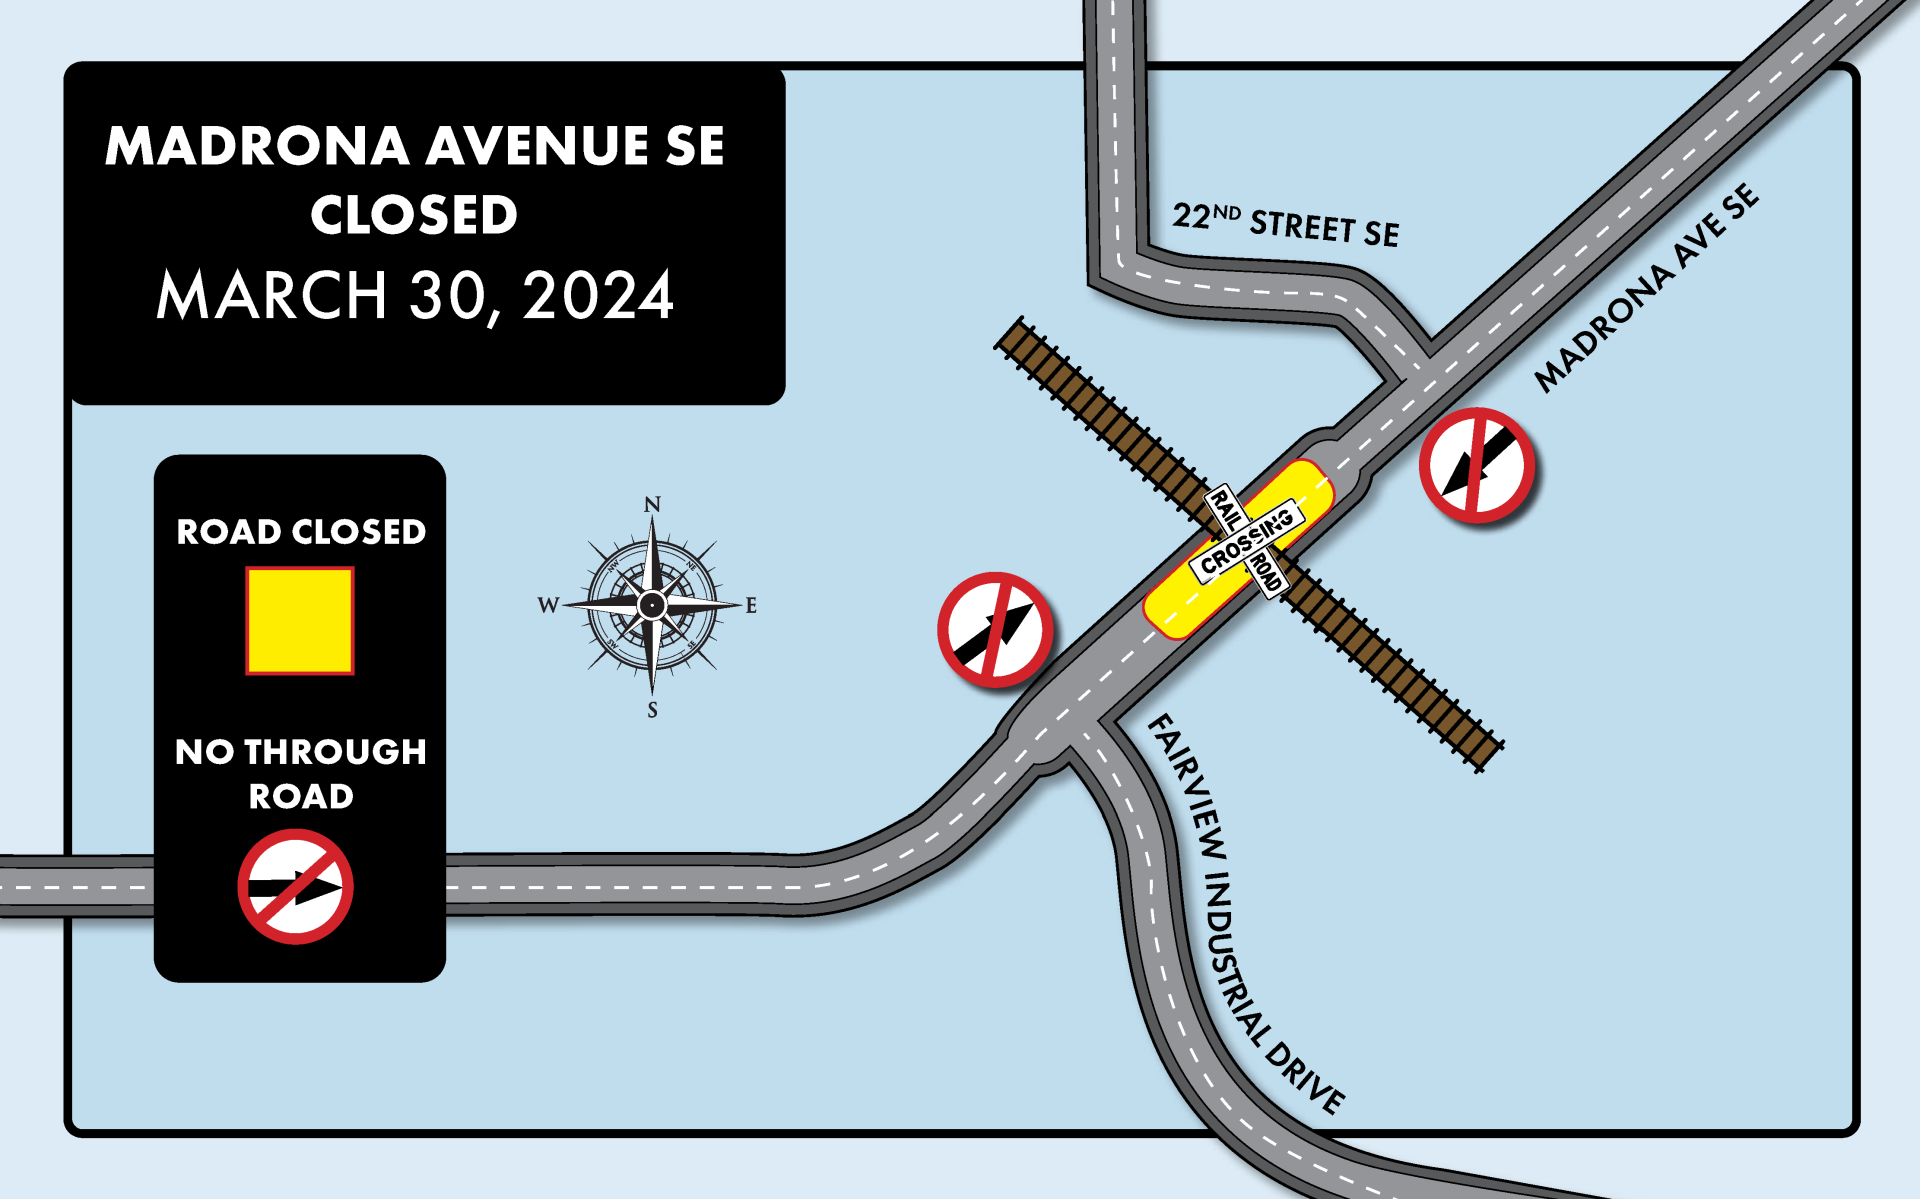 Madrona Avenue SE Closure Map for March 30, 2024